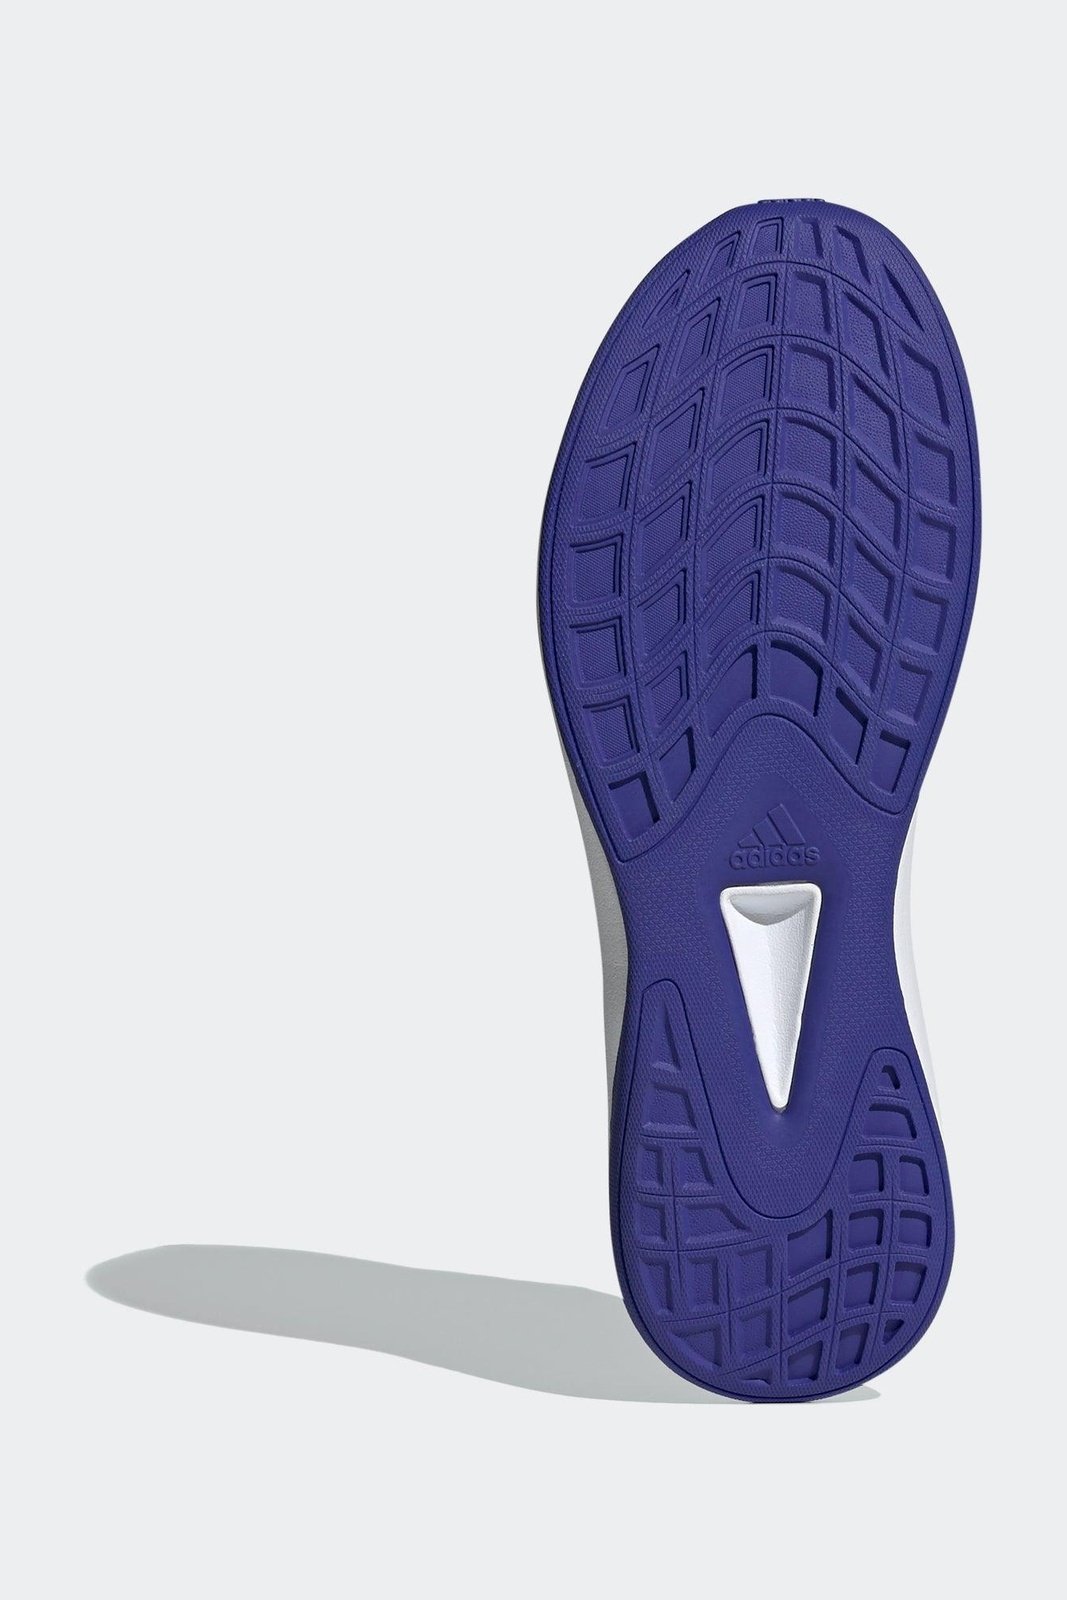 ADIDAS - נעלי ספורט לנשים QT RACER בצבע לבן - MASHBIR//365